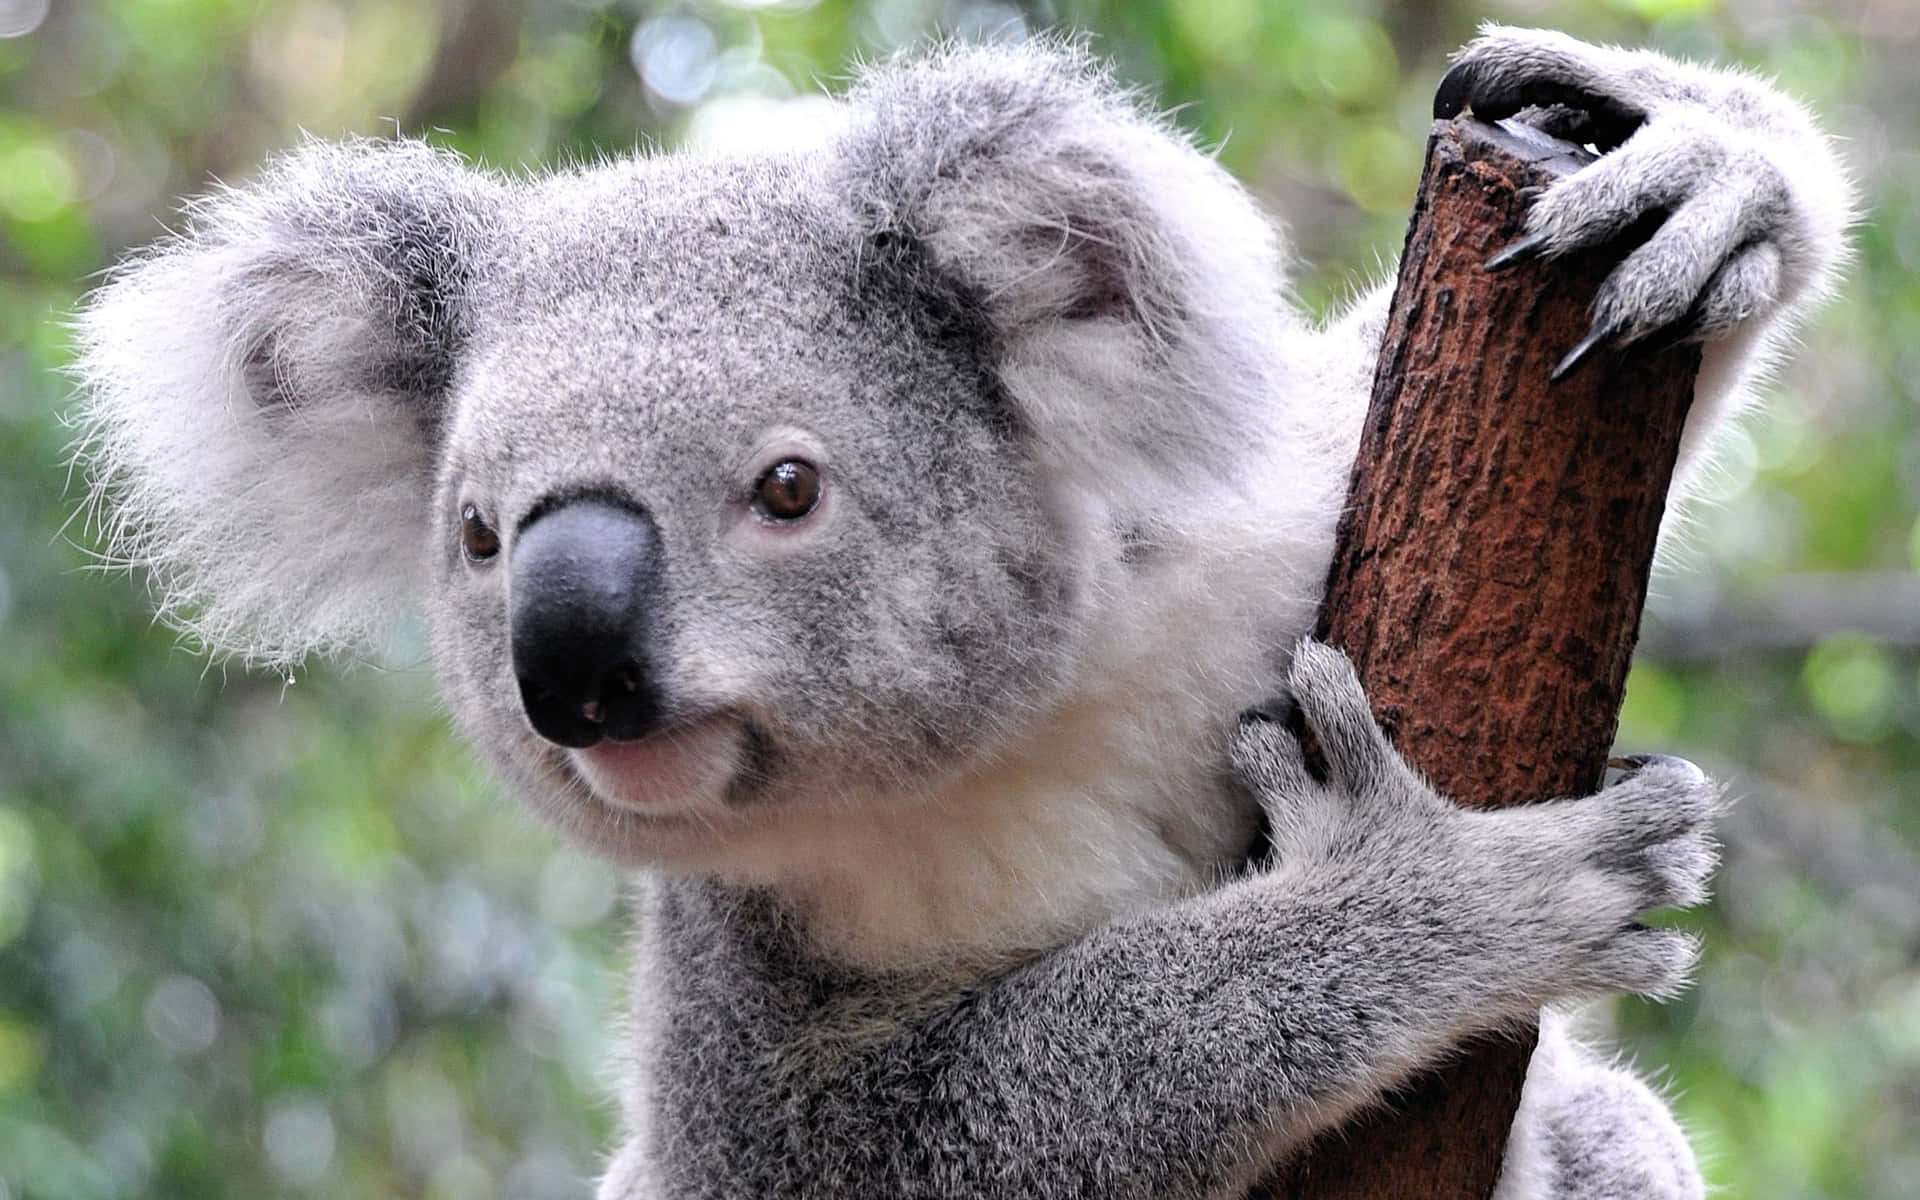 Koala relaxing in a eucalyptus tree in its natural habitat